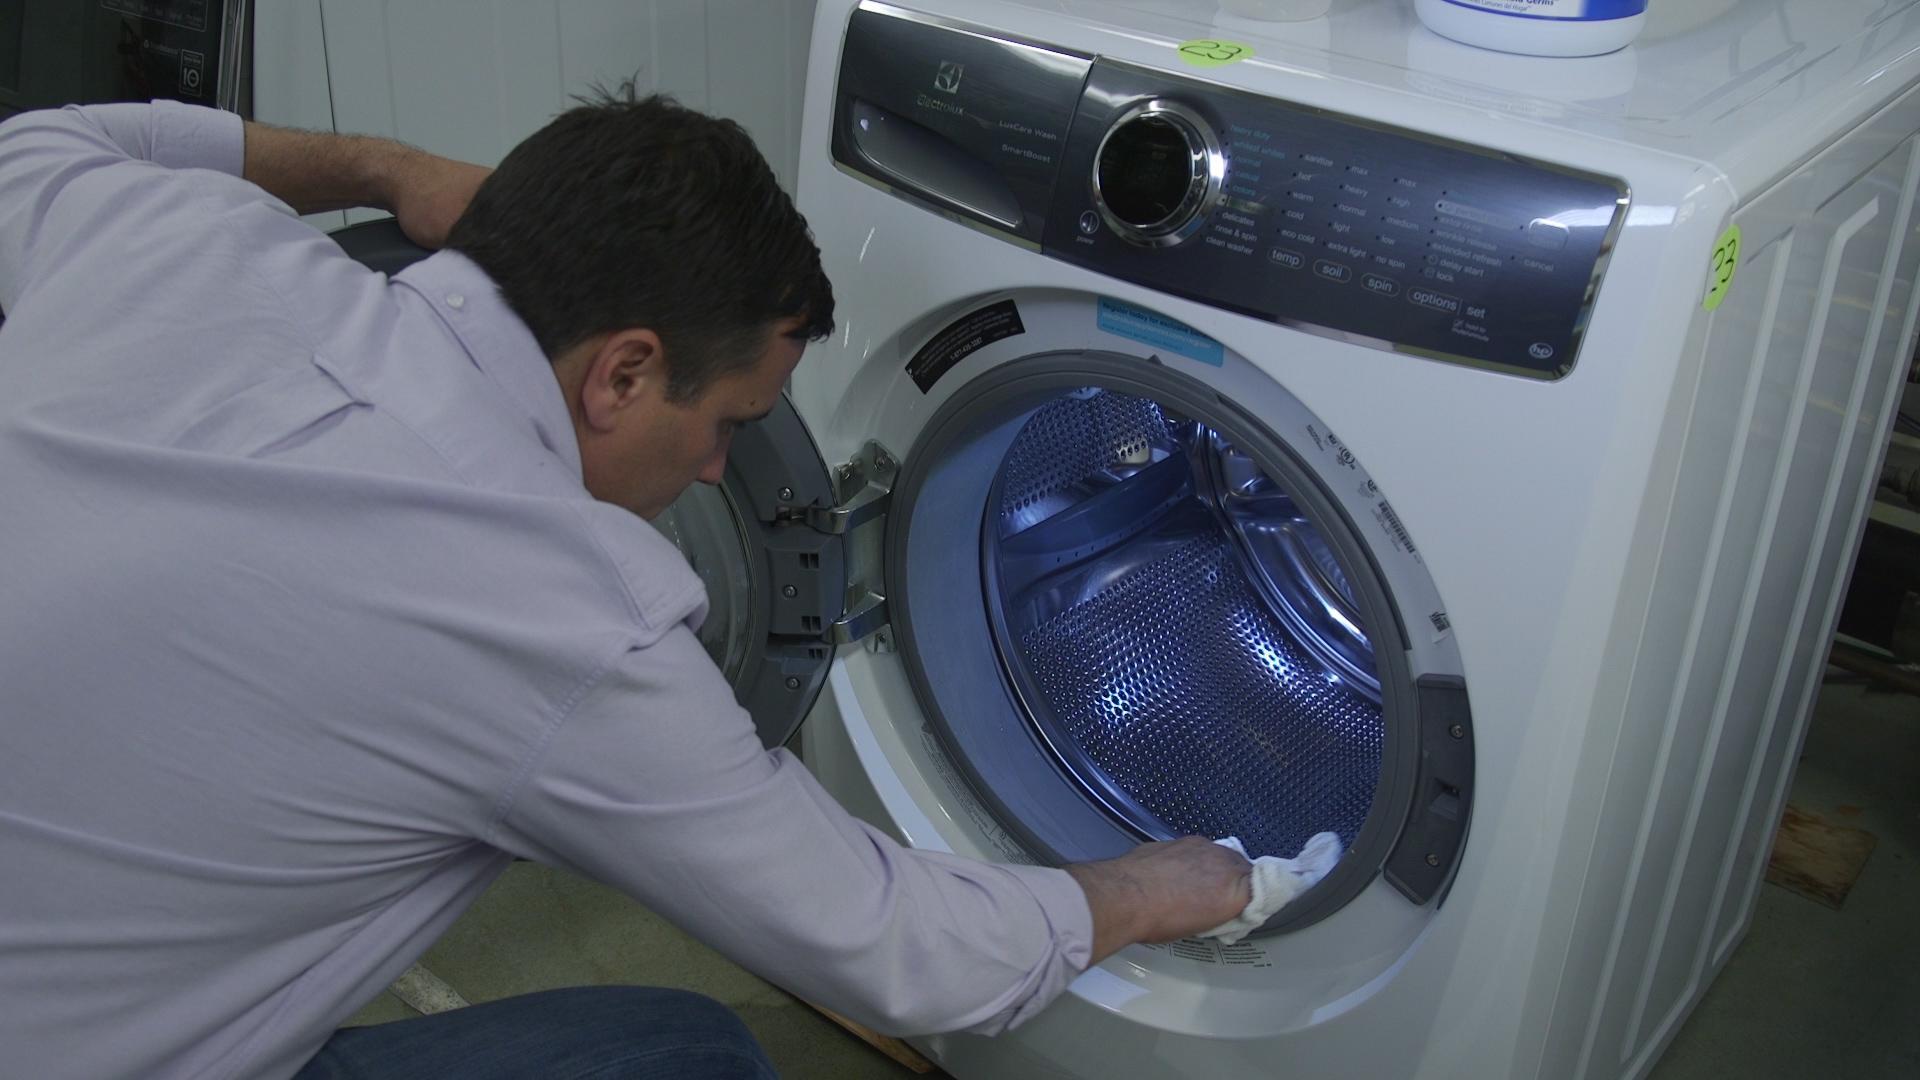 Cómo limpiar tu lavadora - Consumer Reports